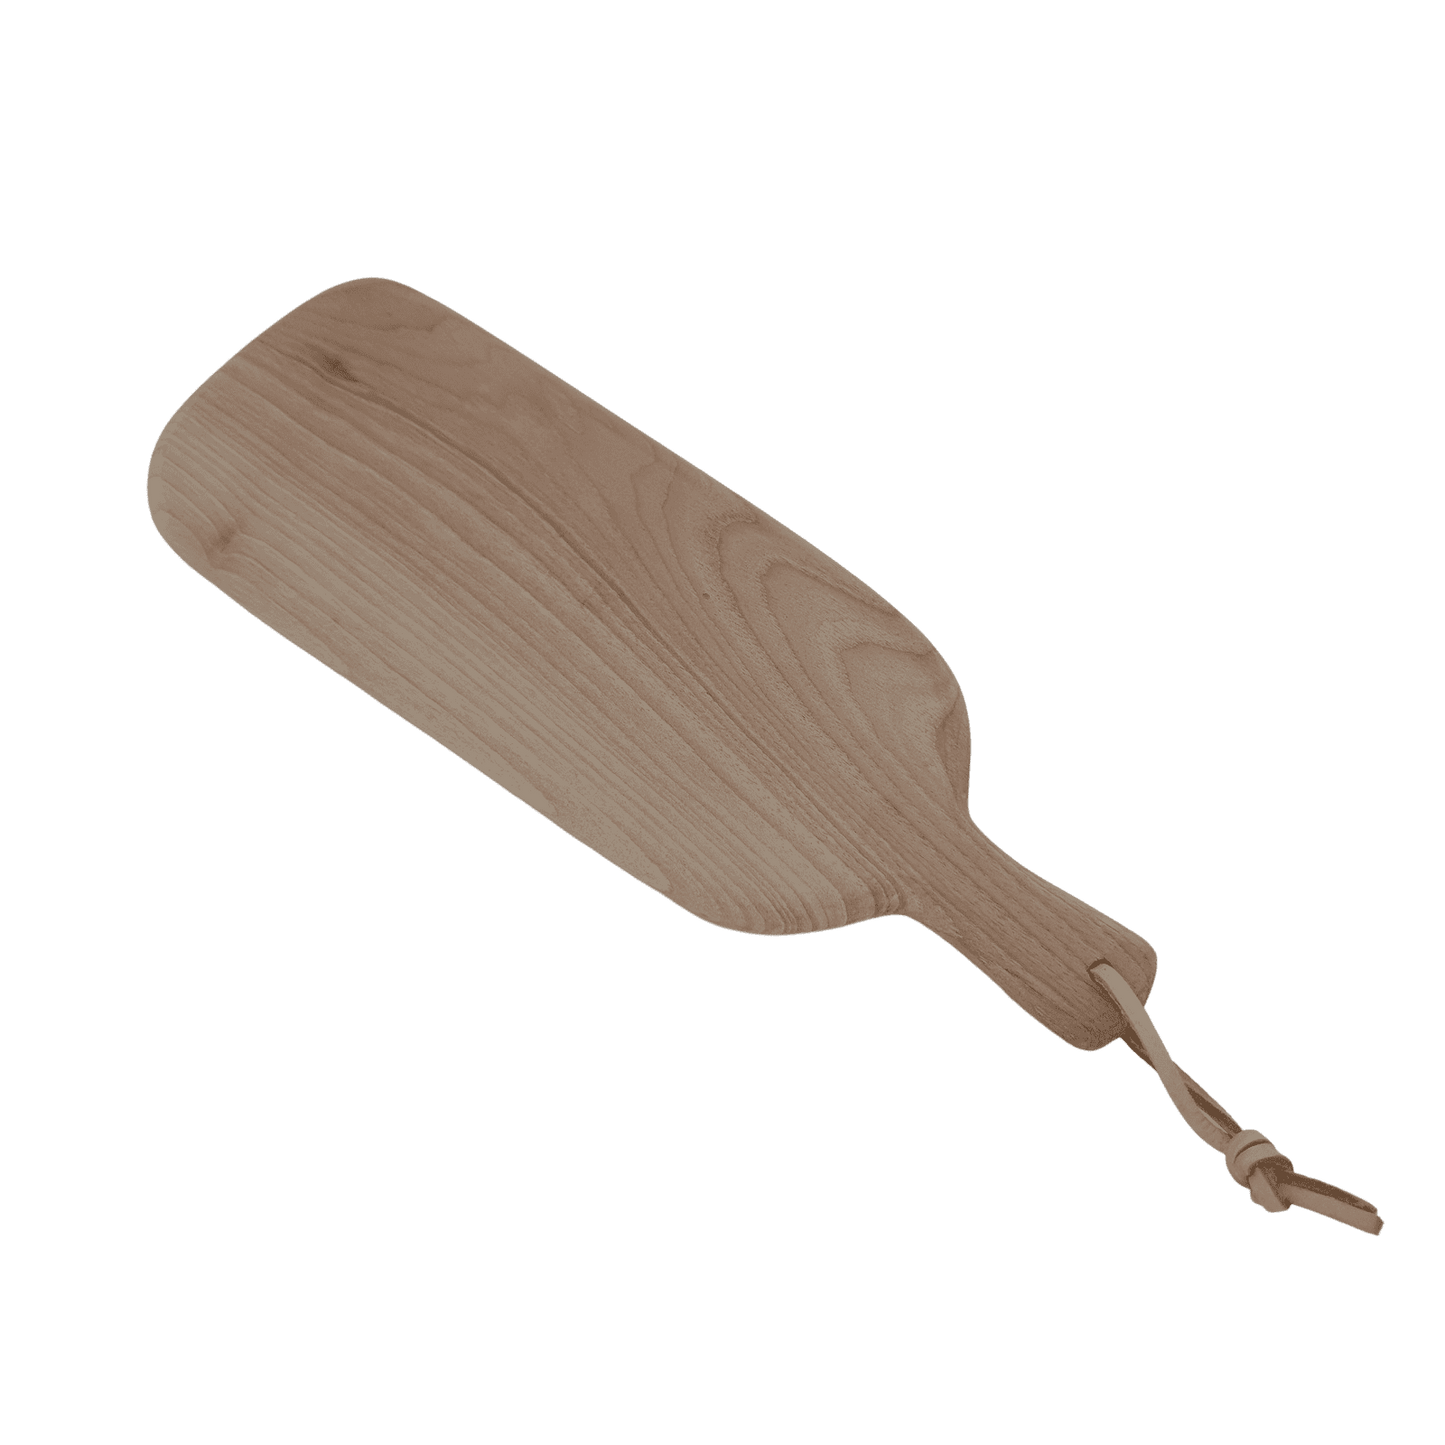 Tapas platter in walnut wood - medium size